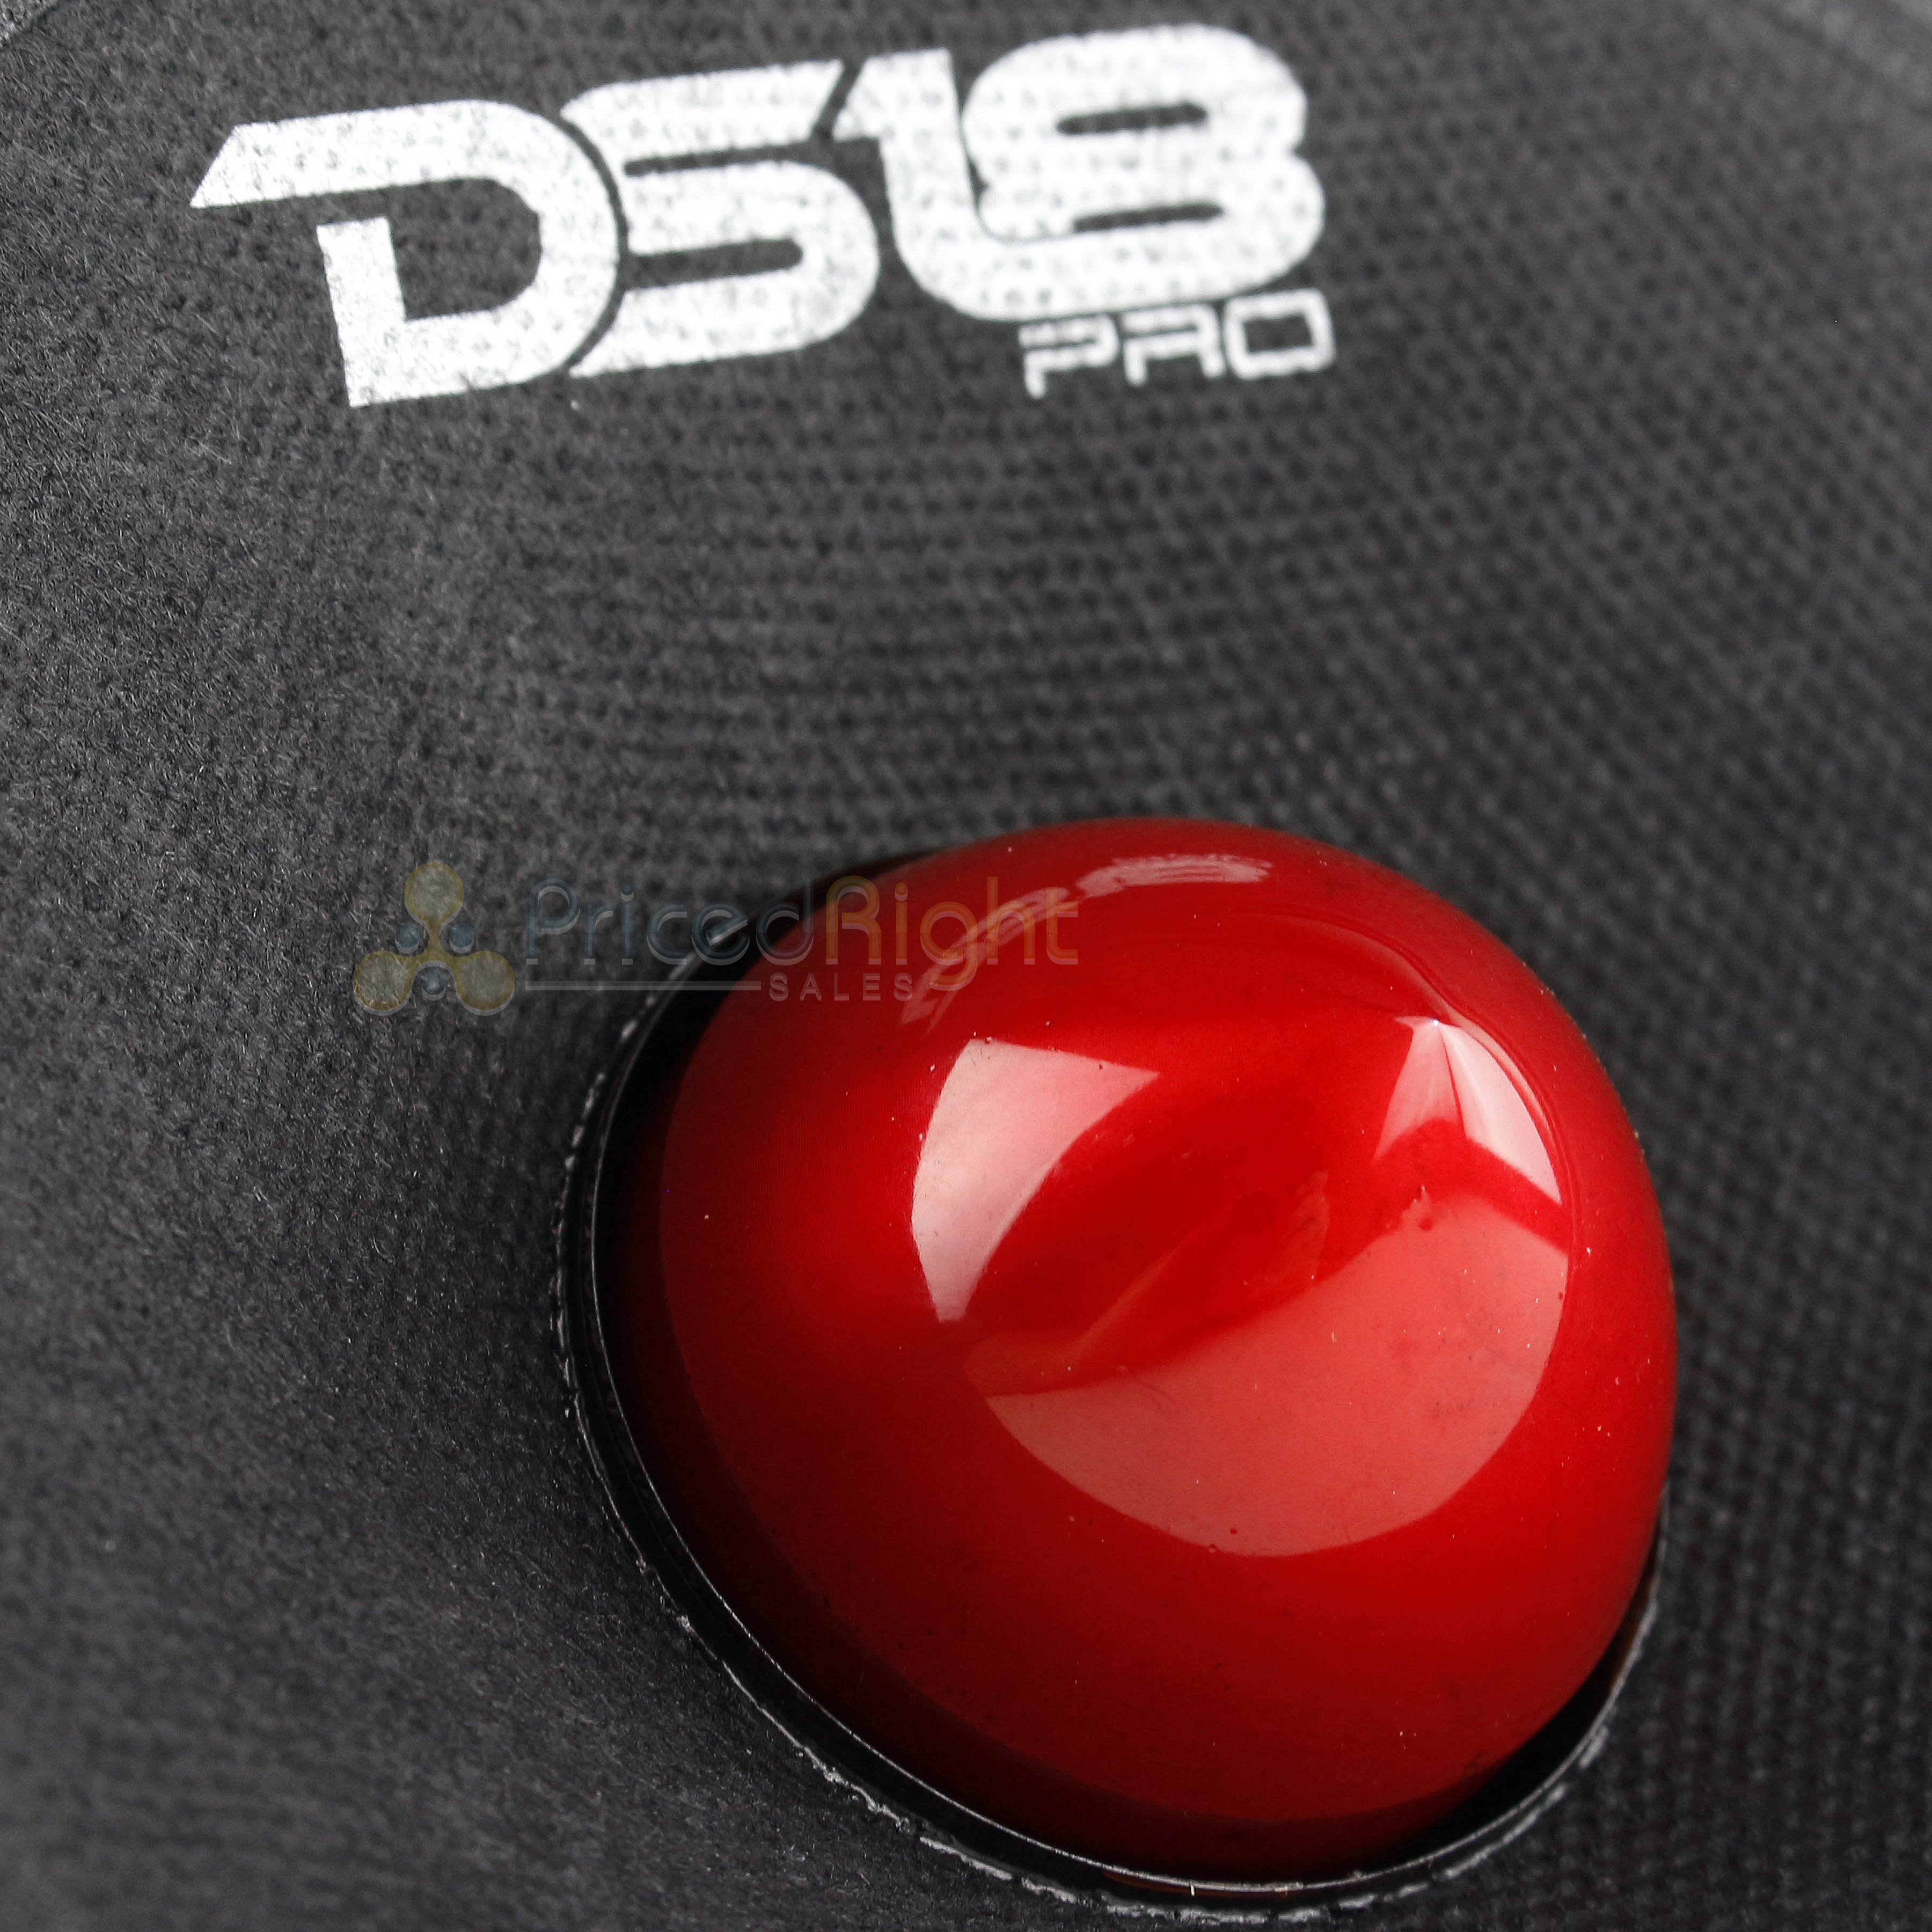 2 DS18 PRO-GM6B 6.5" Midrange Bullet Speakers 480 Watts Max Power 8 Ohm Speaker